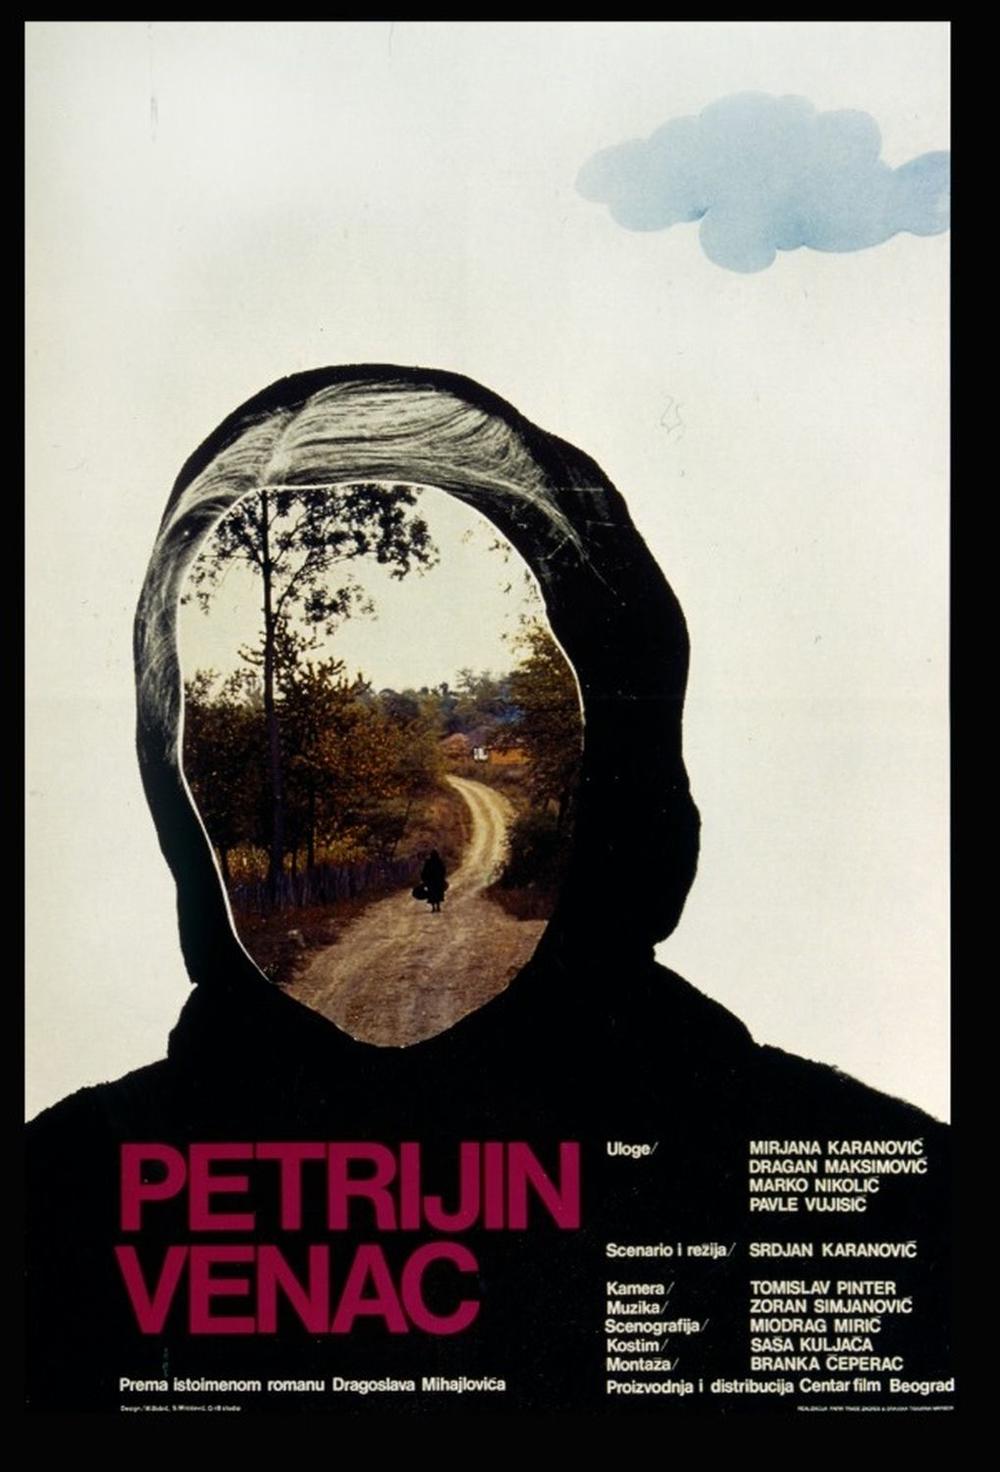 Plakat za film 'Petrijin venac